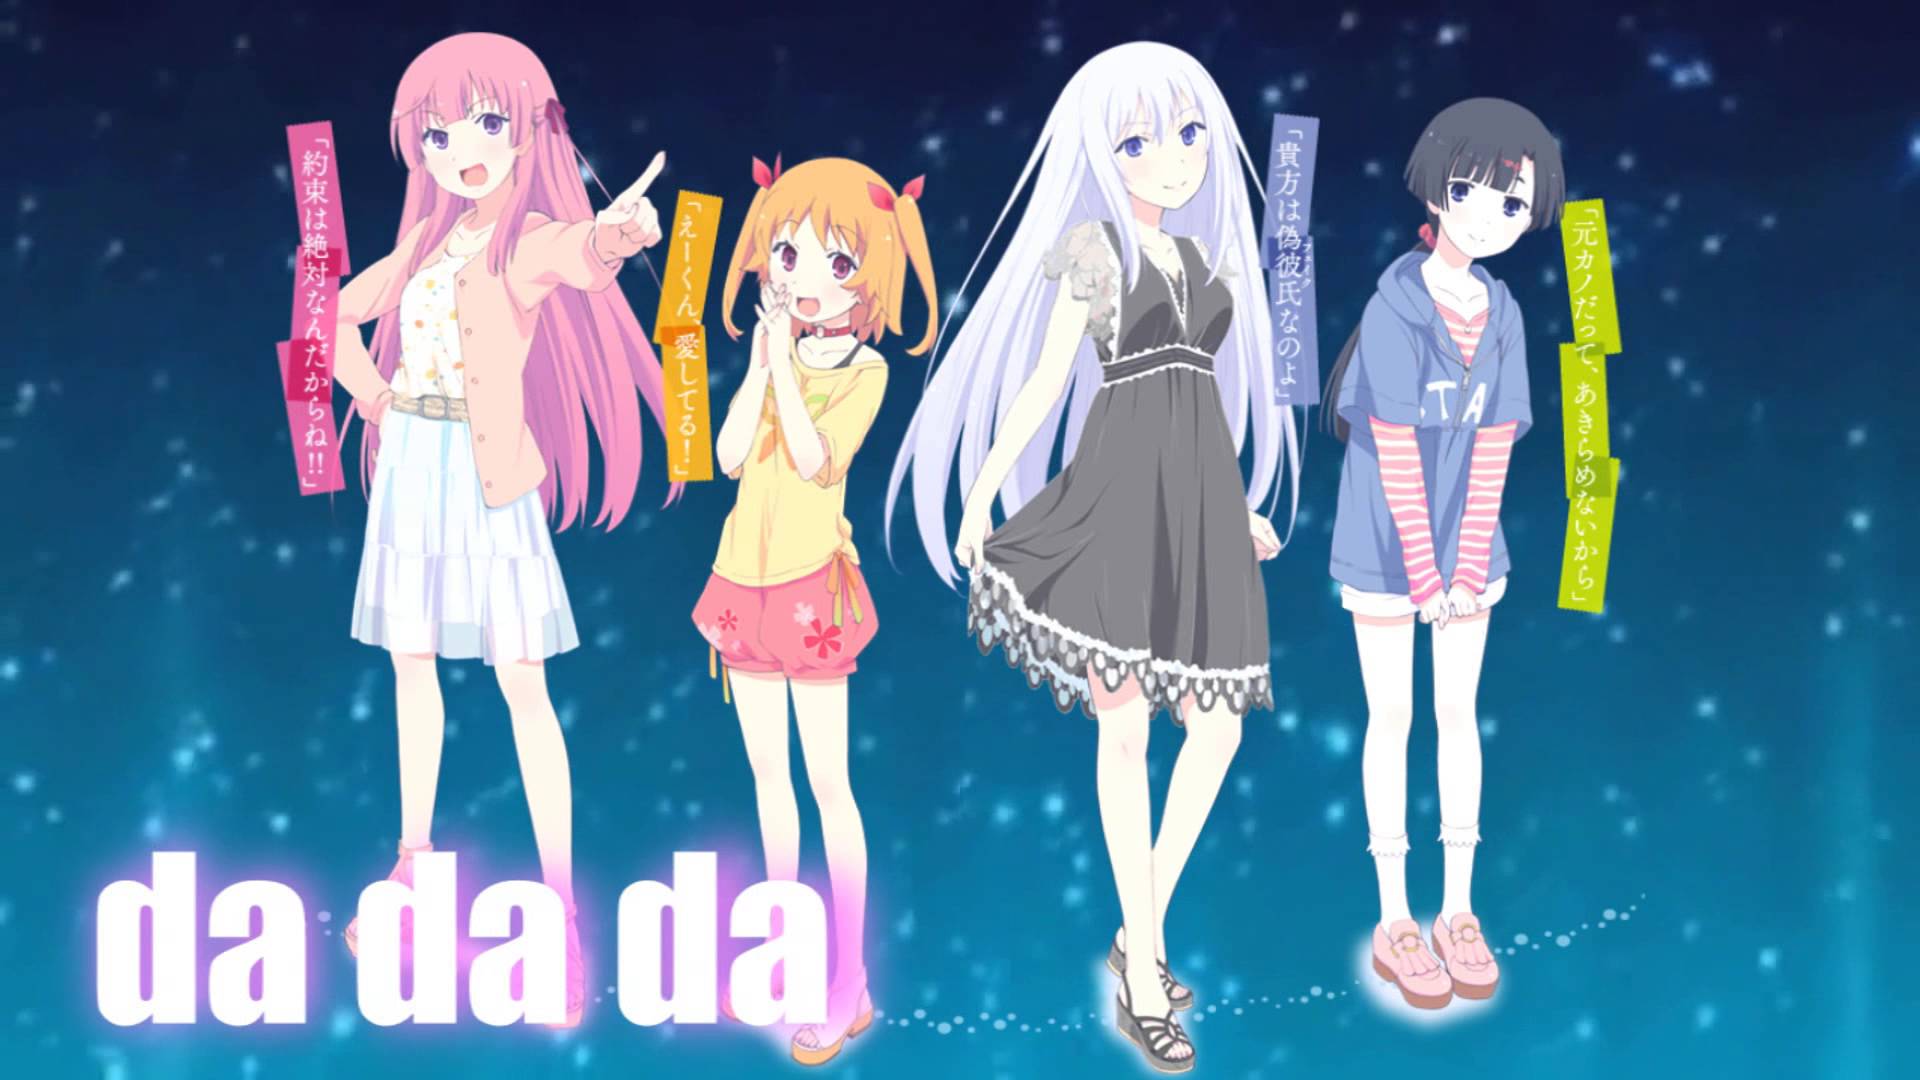 Anime OreShura HD Wallpaper